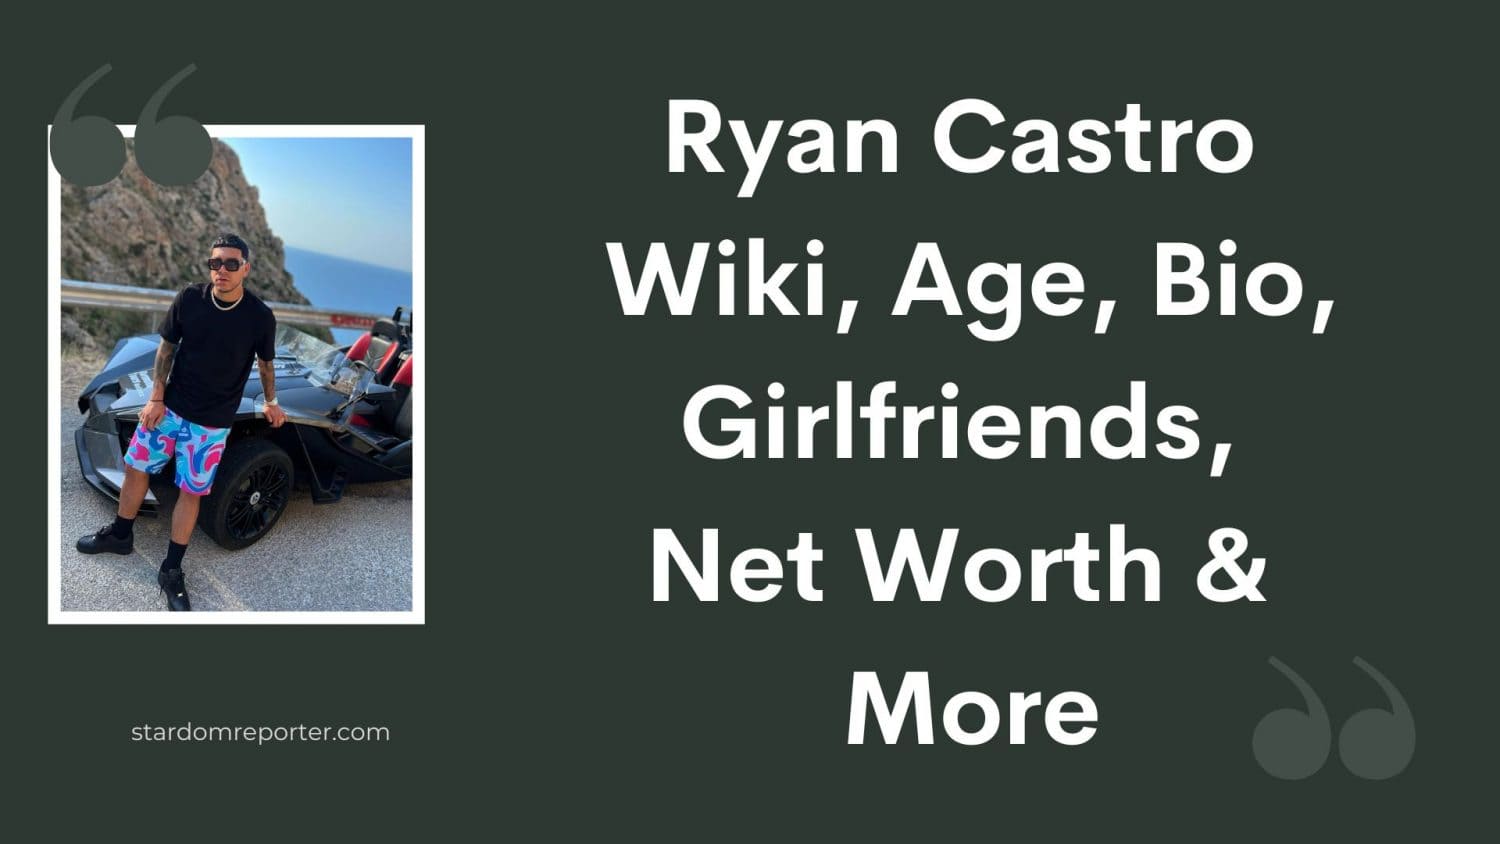 Ryan Castro Wiki, Age, Bio, Girlfriends, Net Worth & More - 31